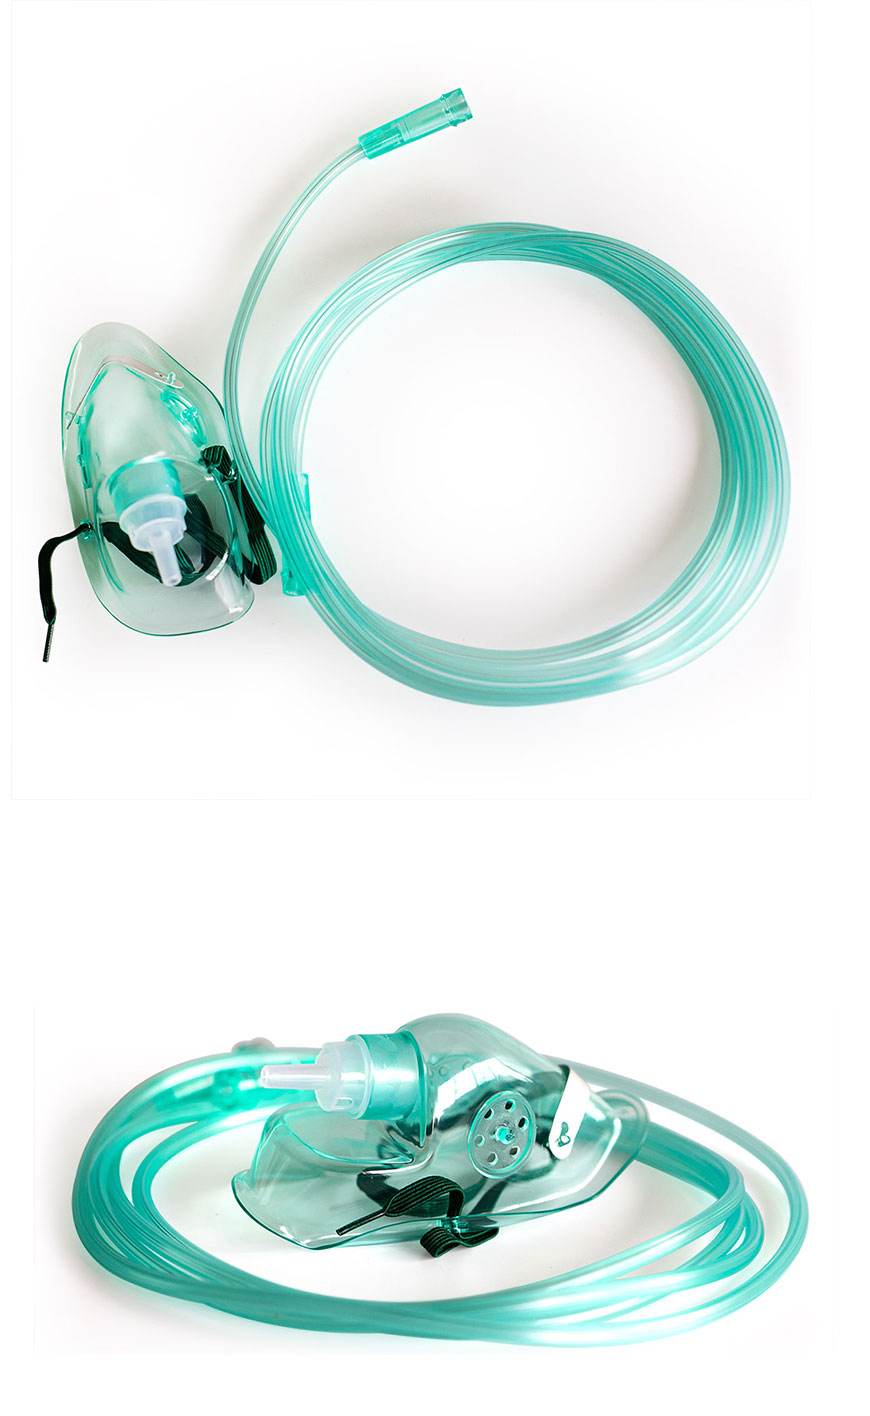 nebulizer mask and tubing